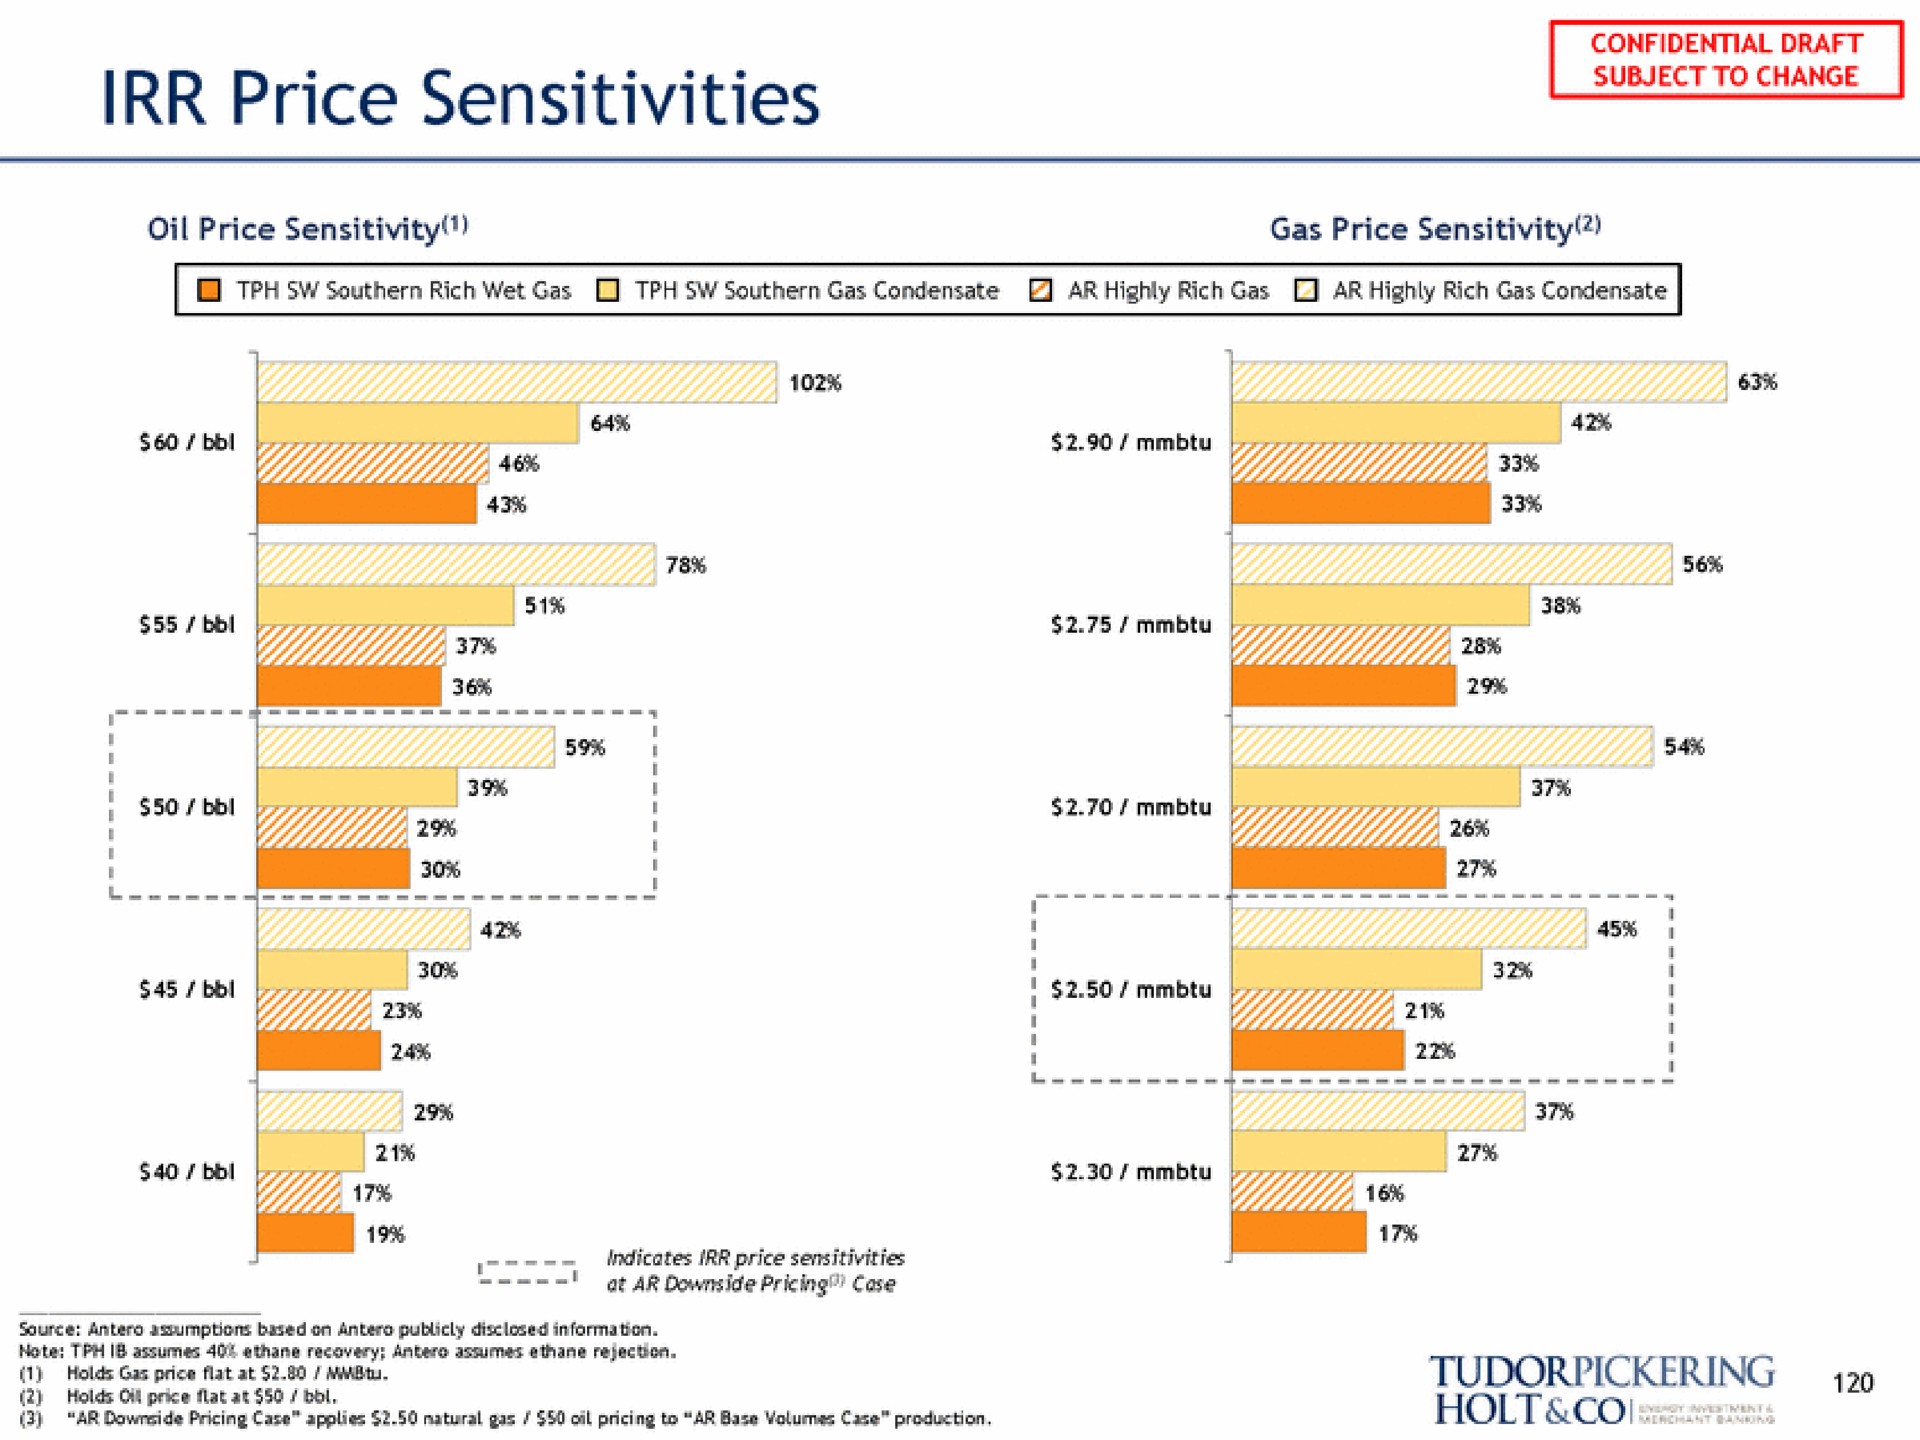 price sensitivities use | Tudor, Pickering, Holt & Co